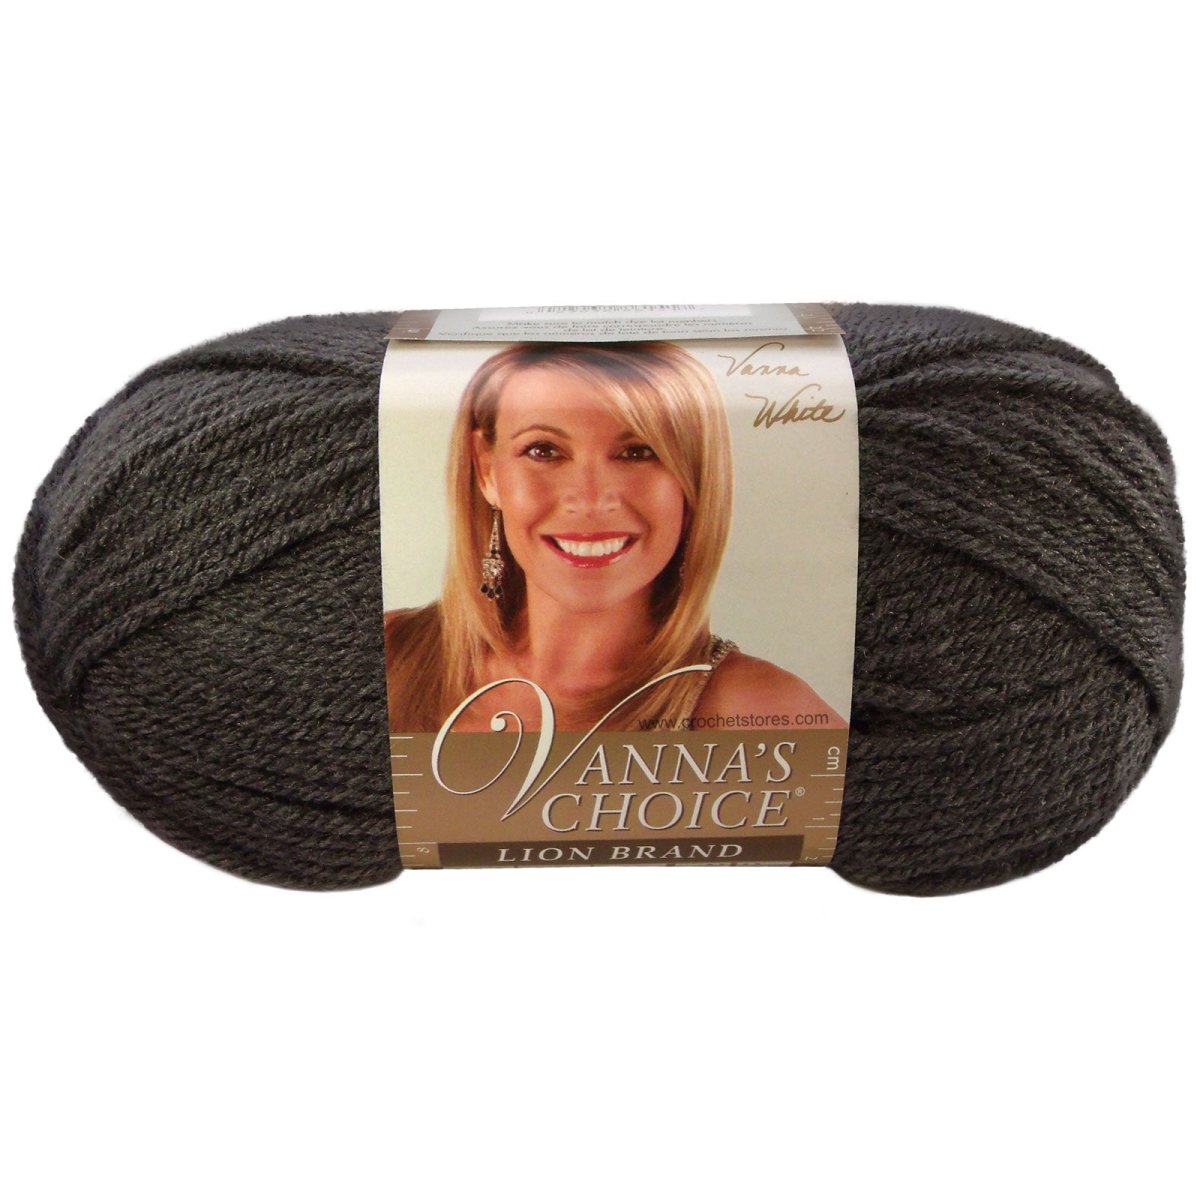 VANNAS CHOICE - Crochetstores860-151